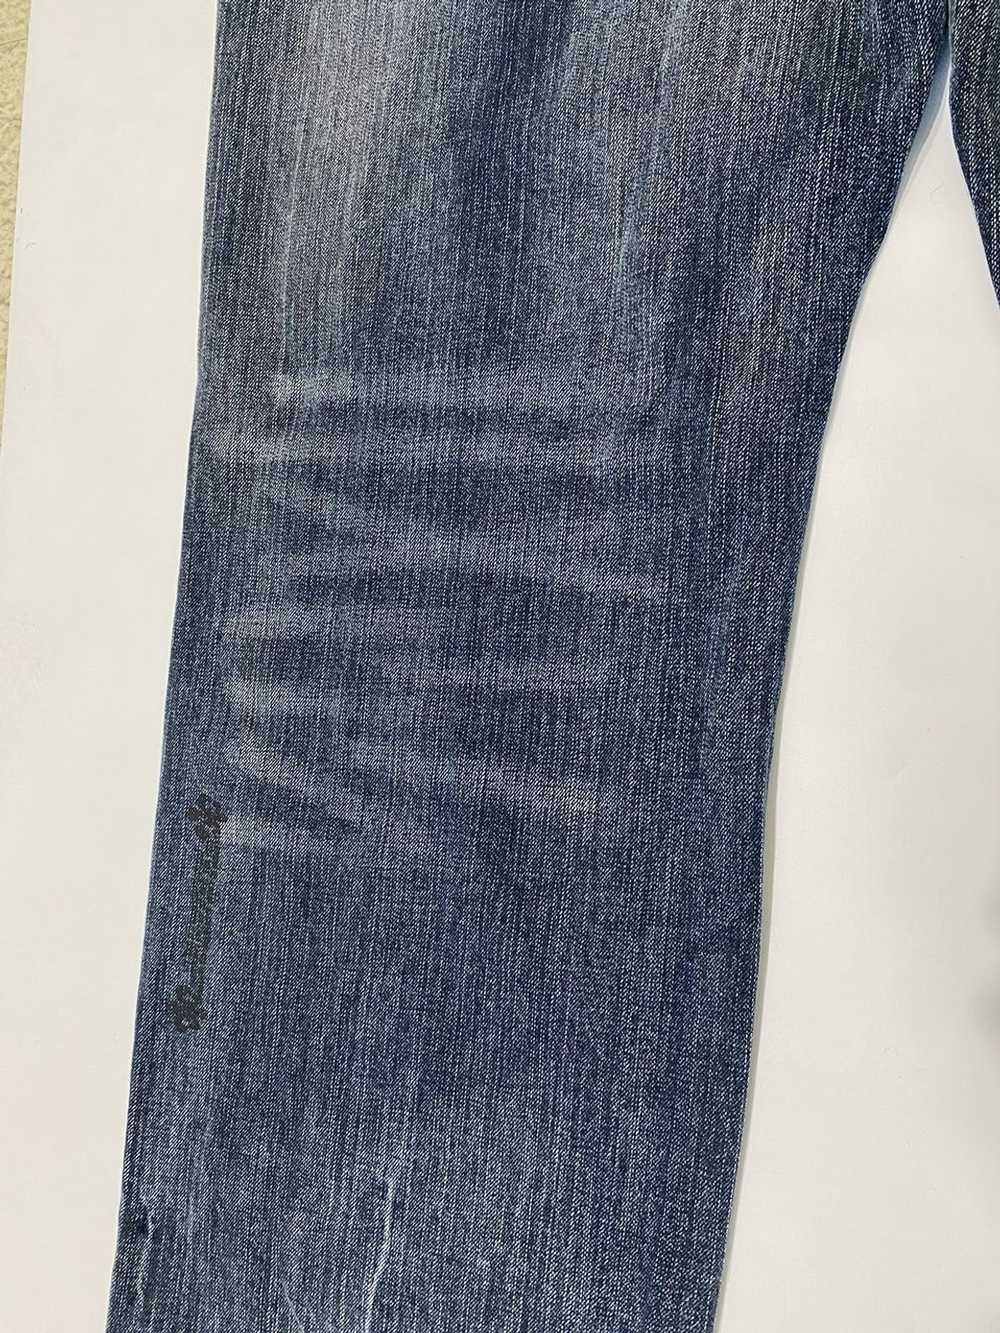 Akademiks Akademiks Men's Jeans Size 40 - image 12